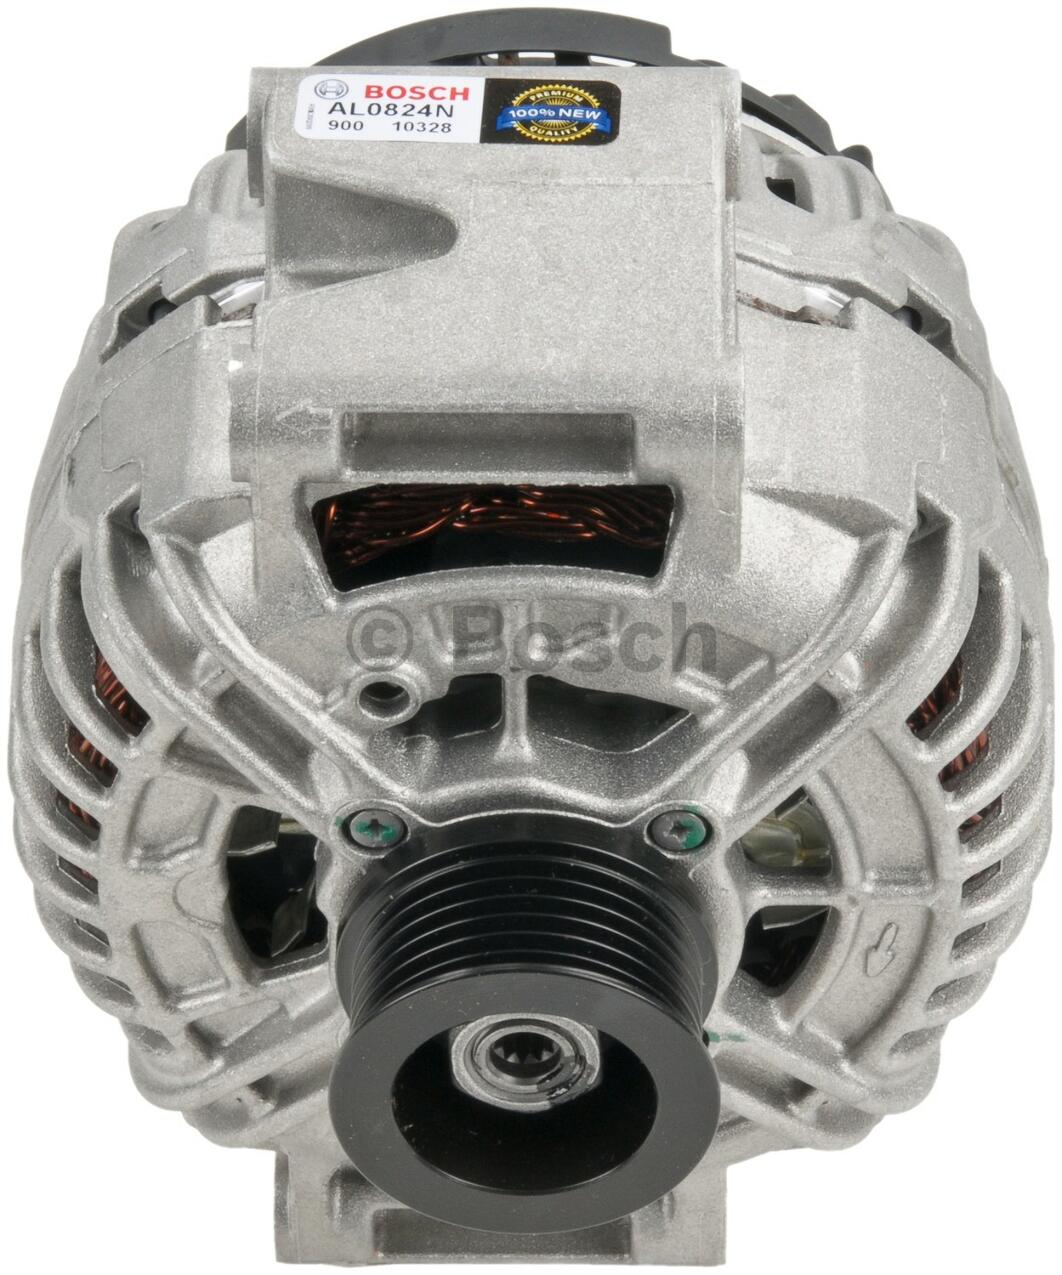 Bosch AL0826N New Alternator